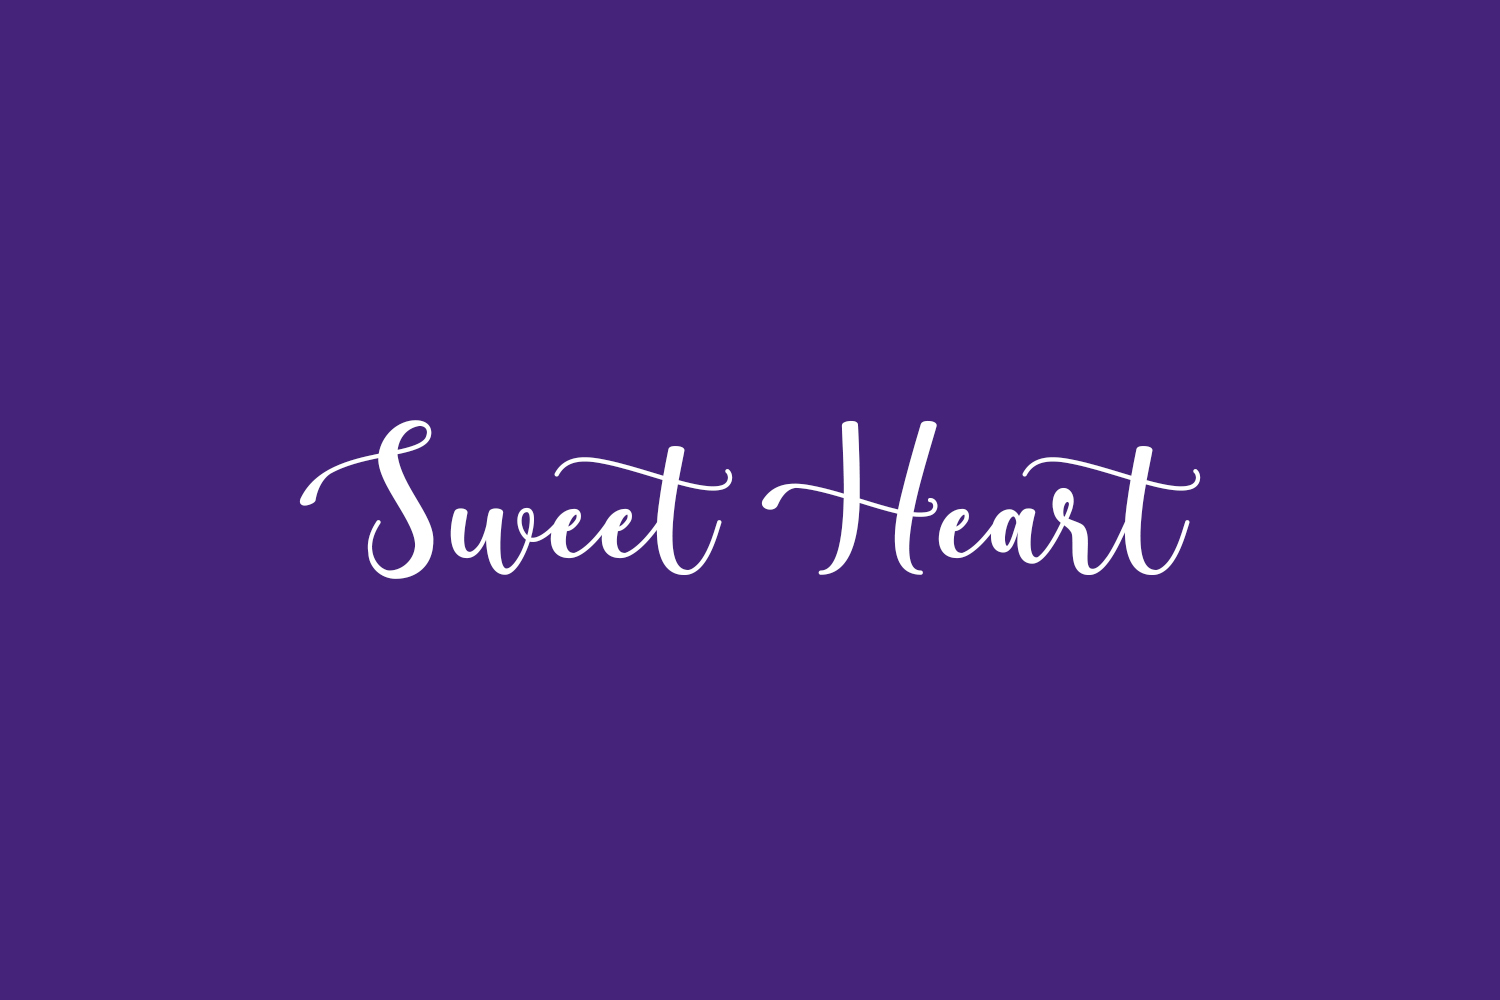 Sweet Heart Free Font